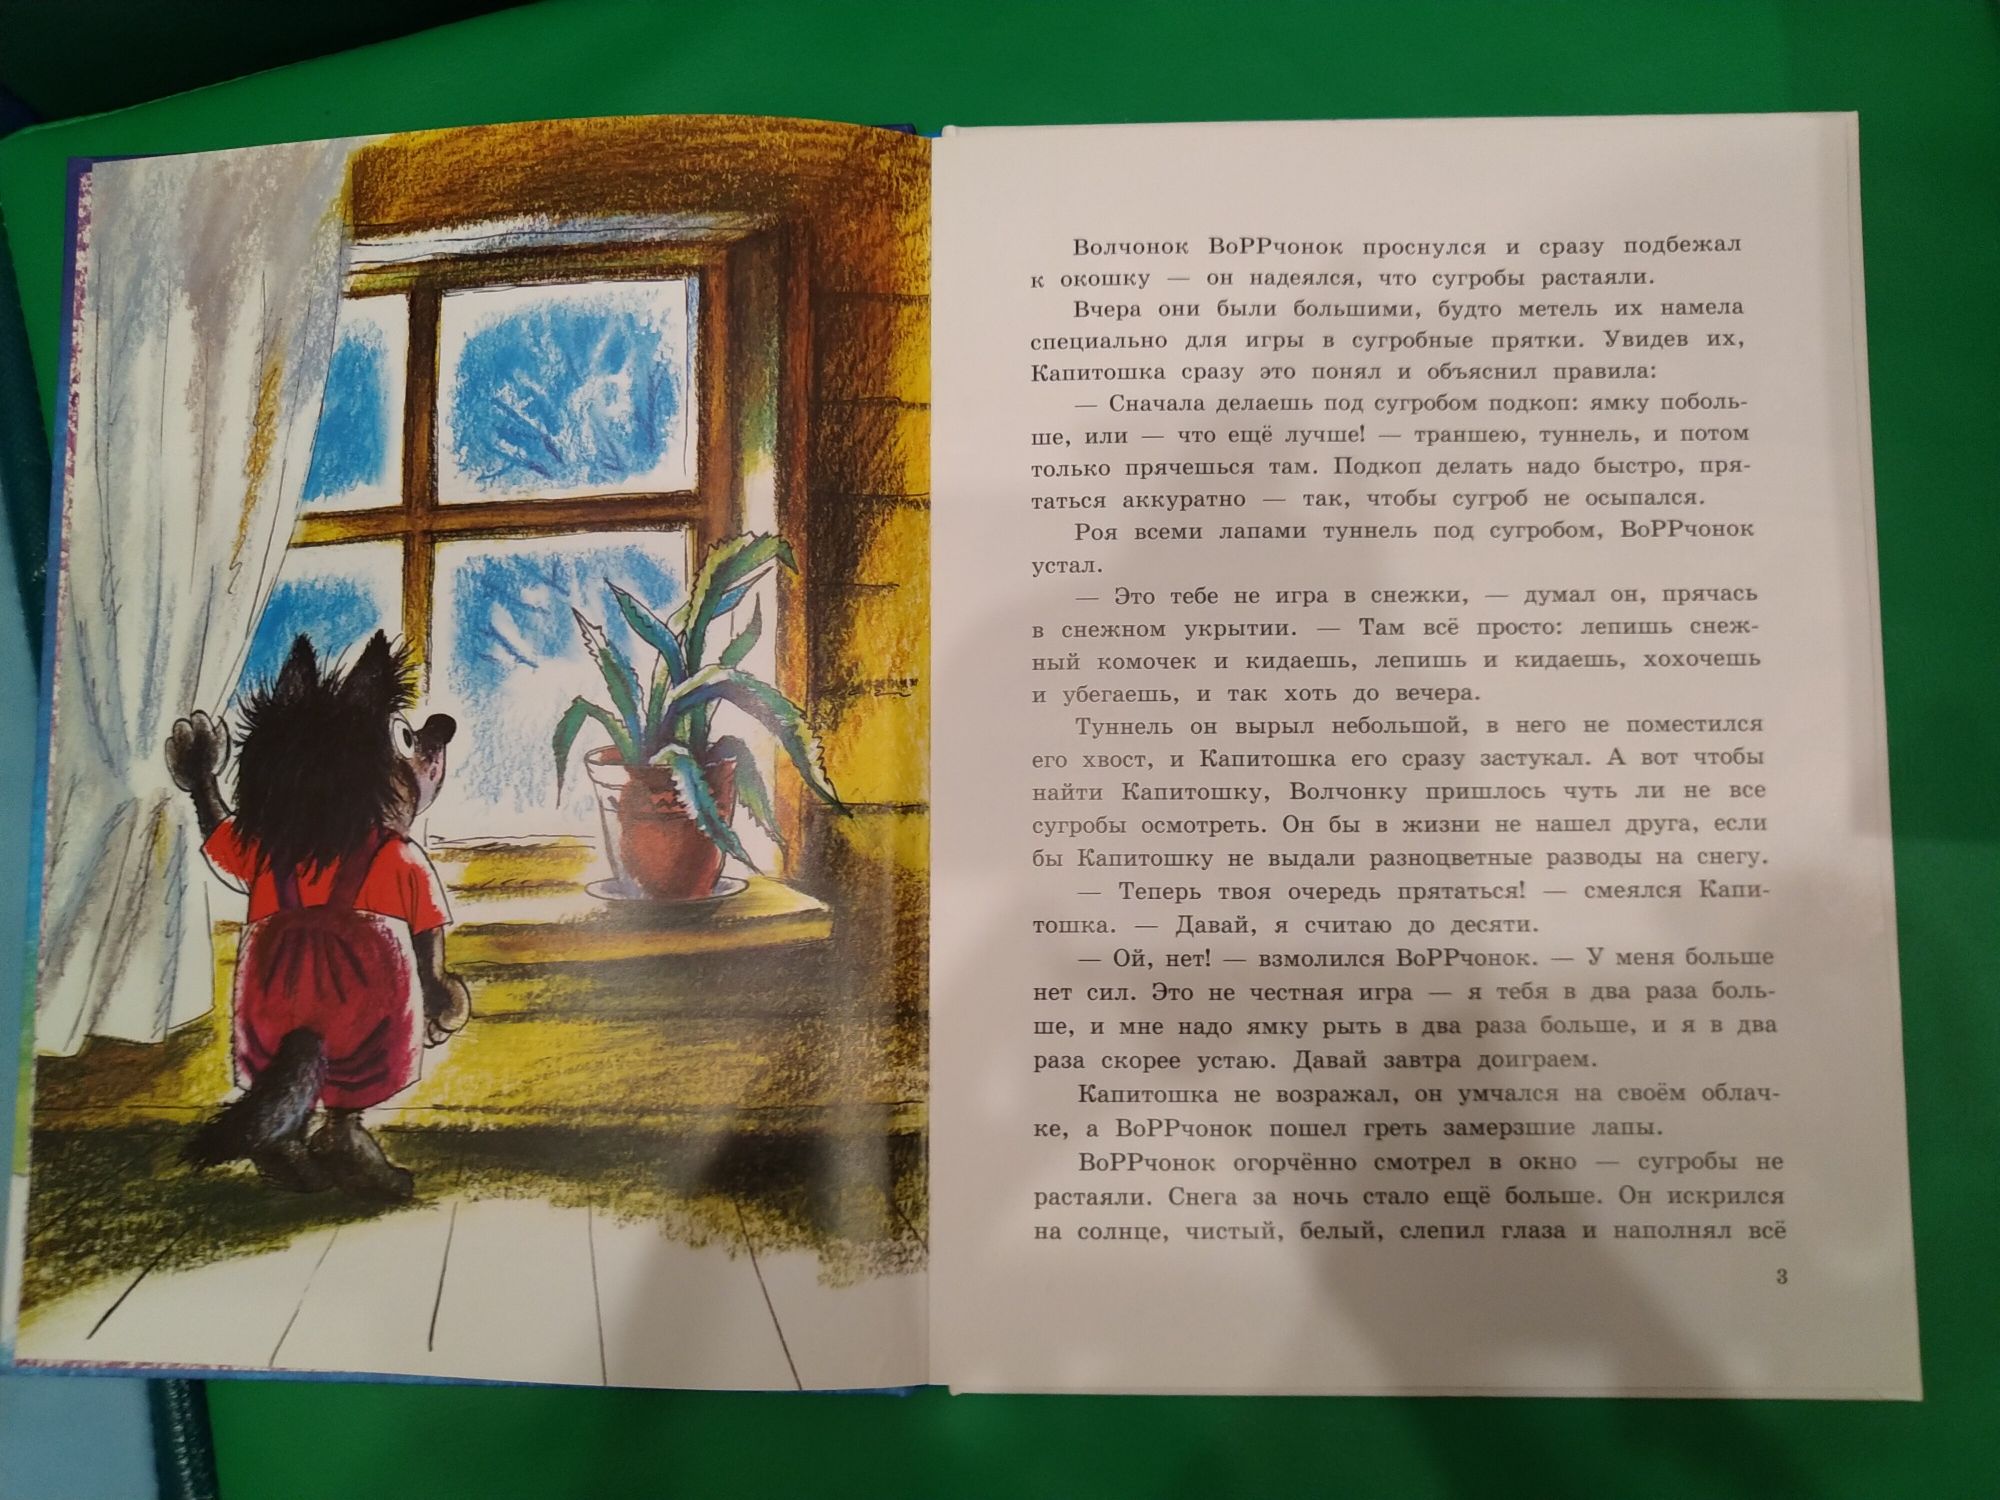 Дитяча книга Капітошка и Самый Настоящий Новый год Наташа Гузеева